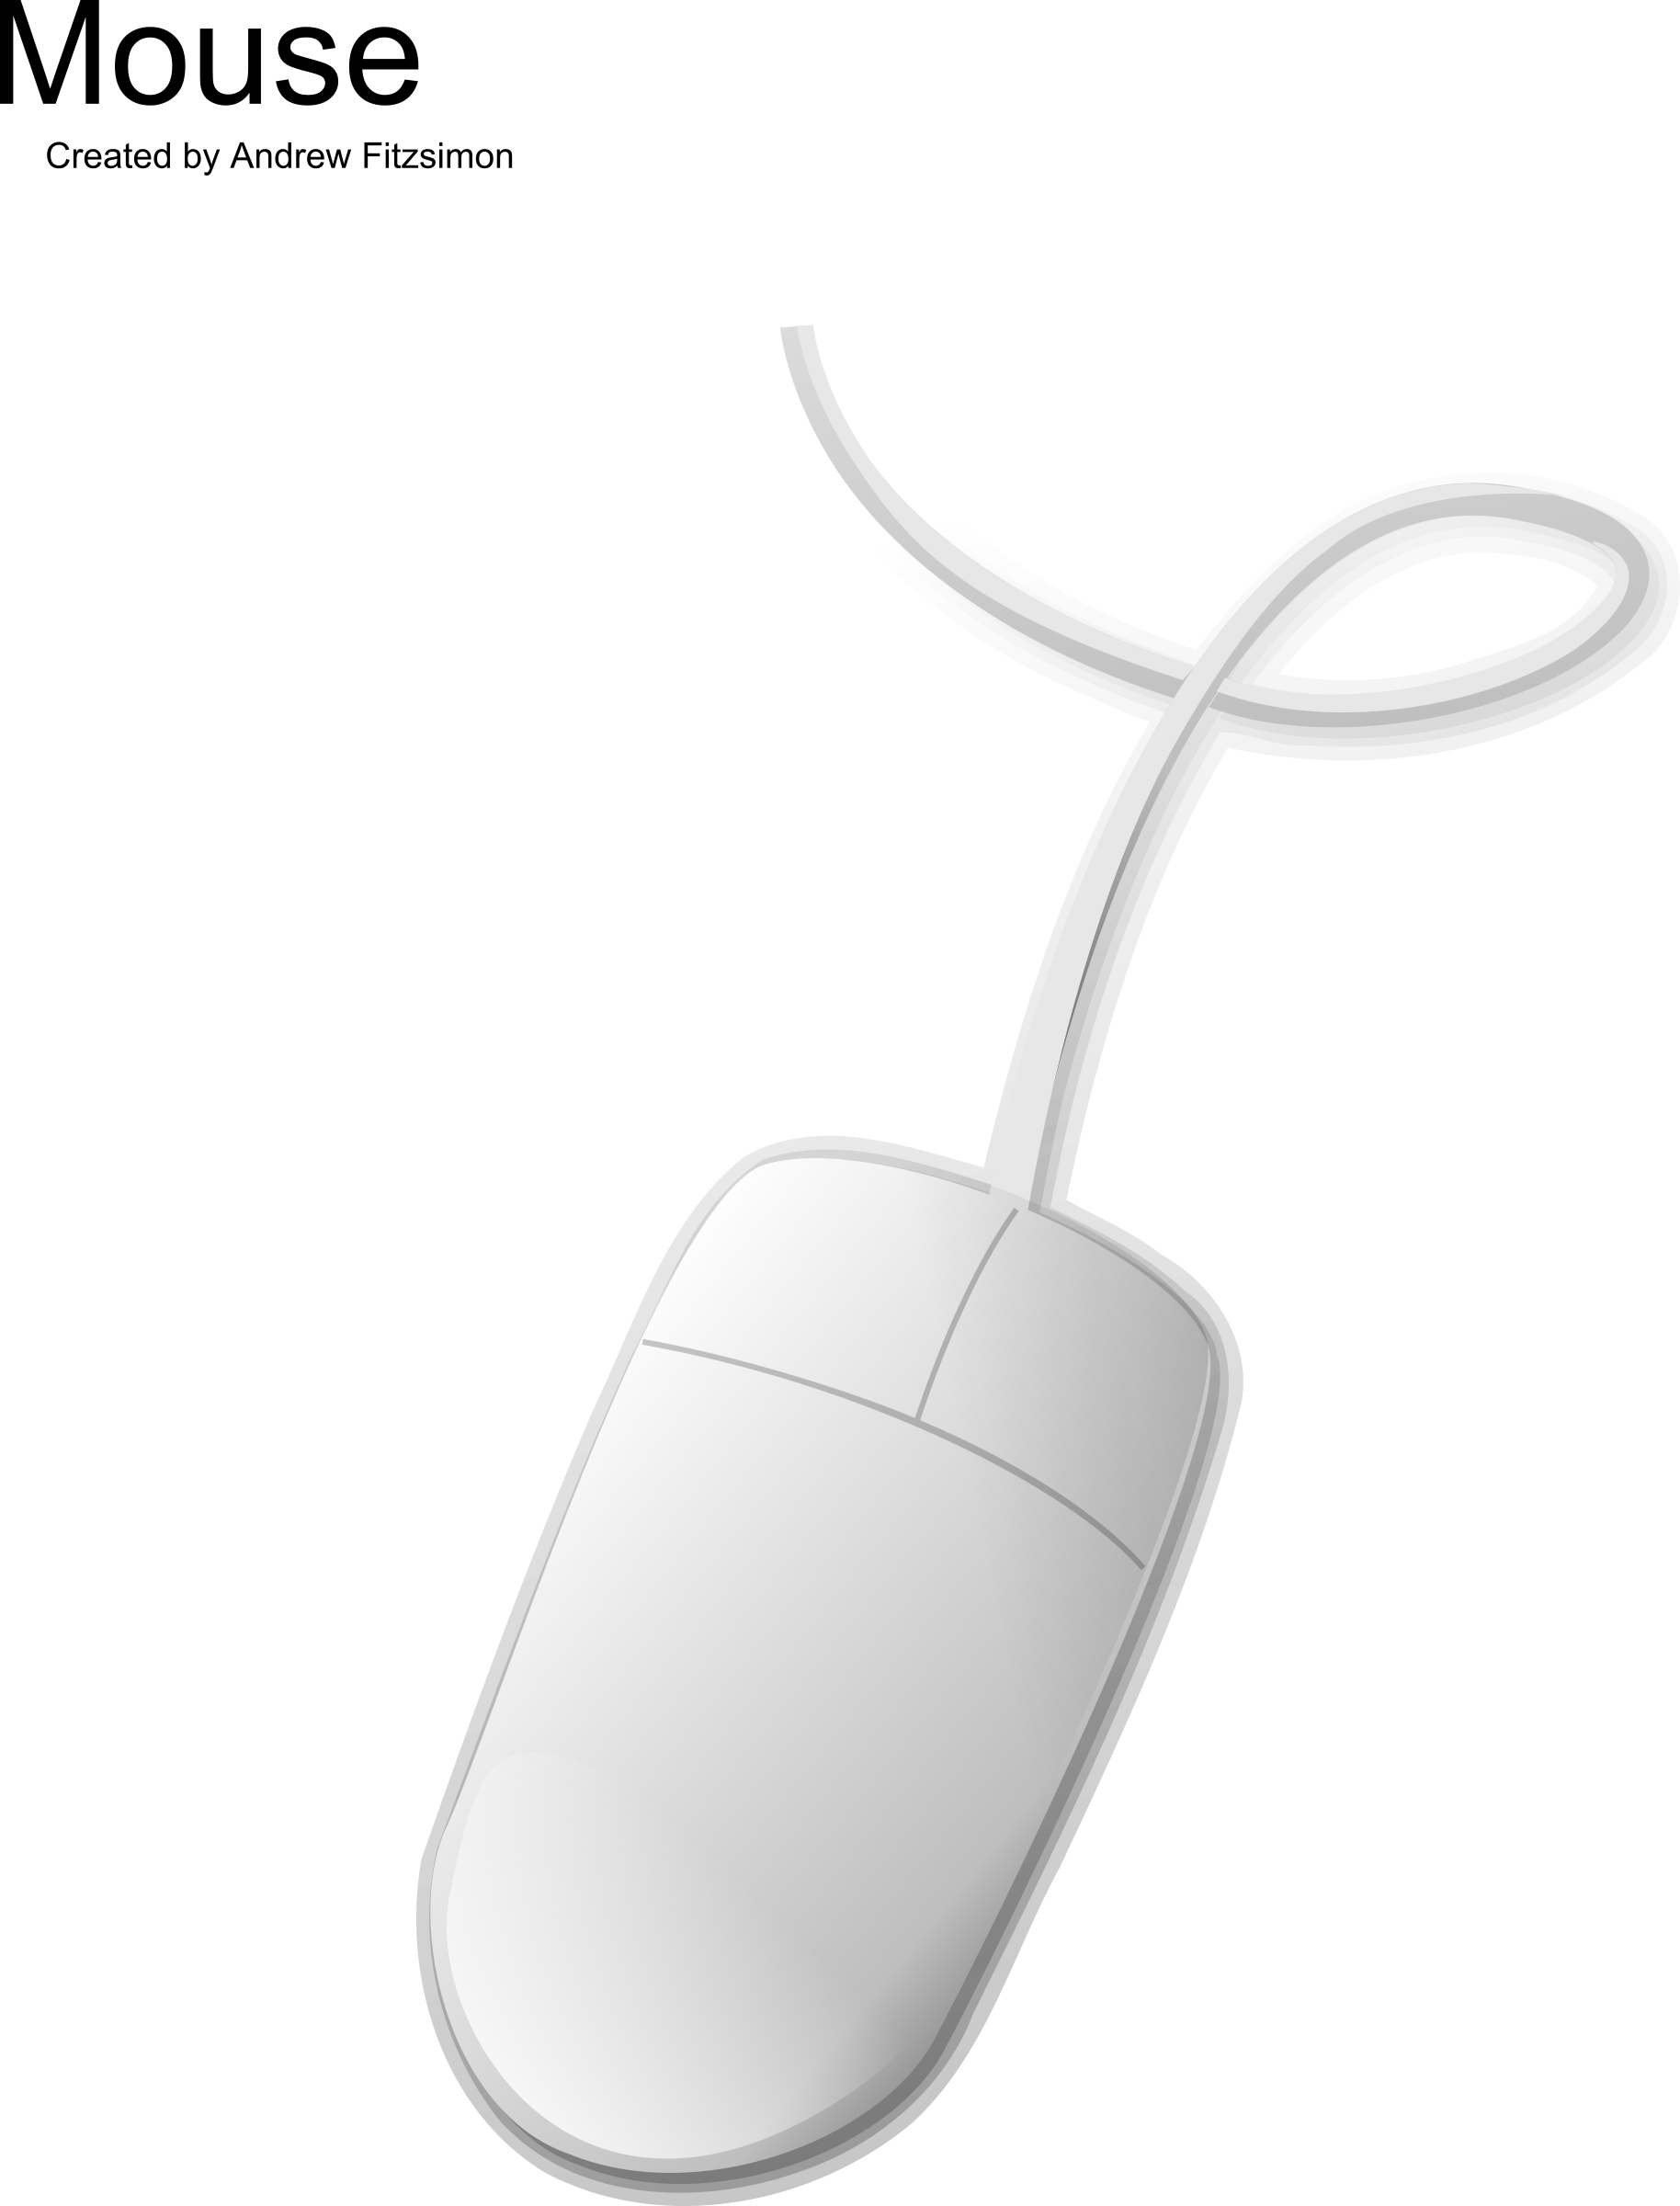 PC mouse Trasparente